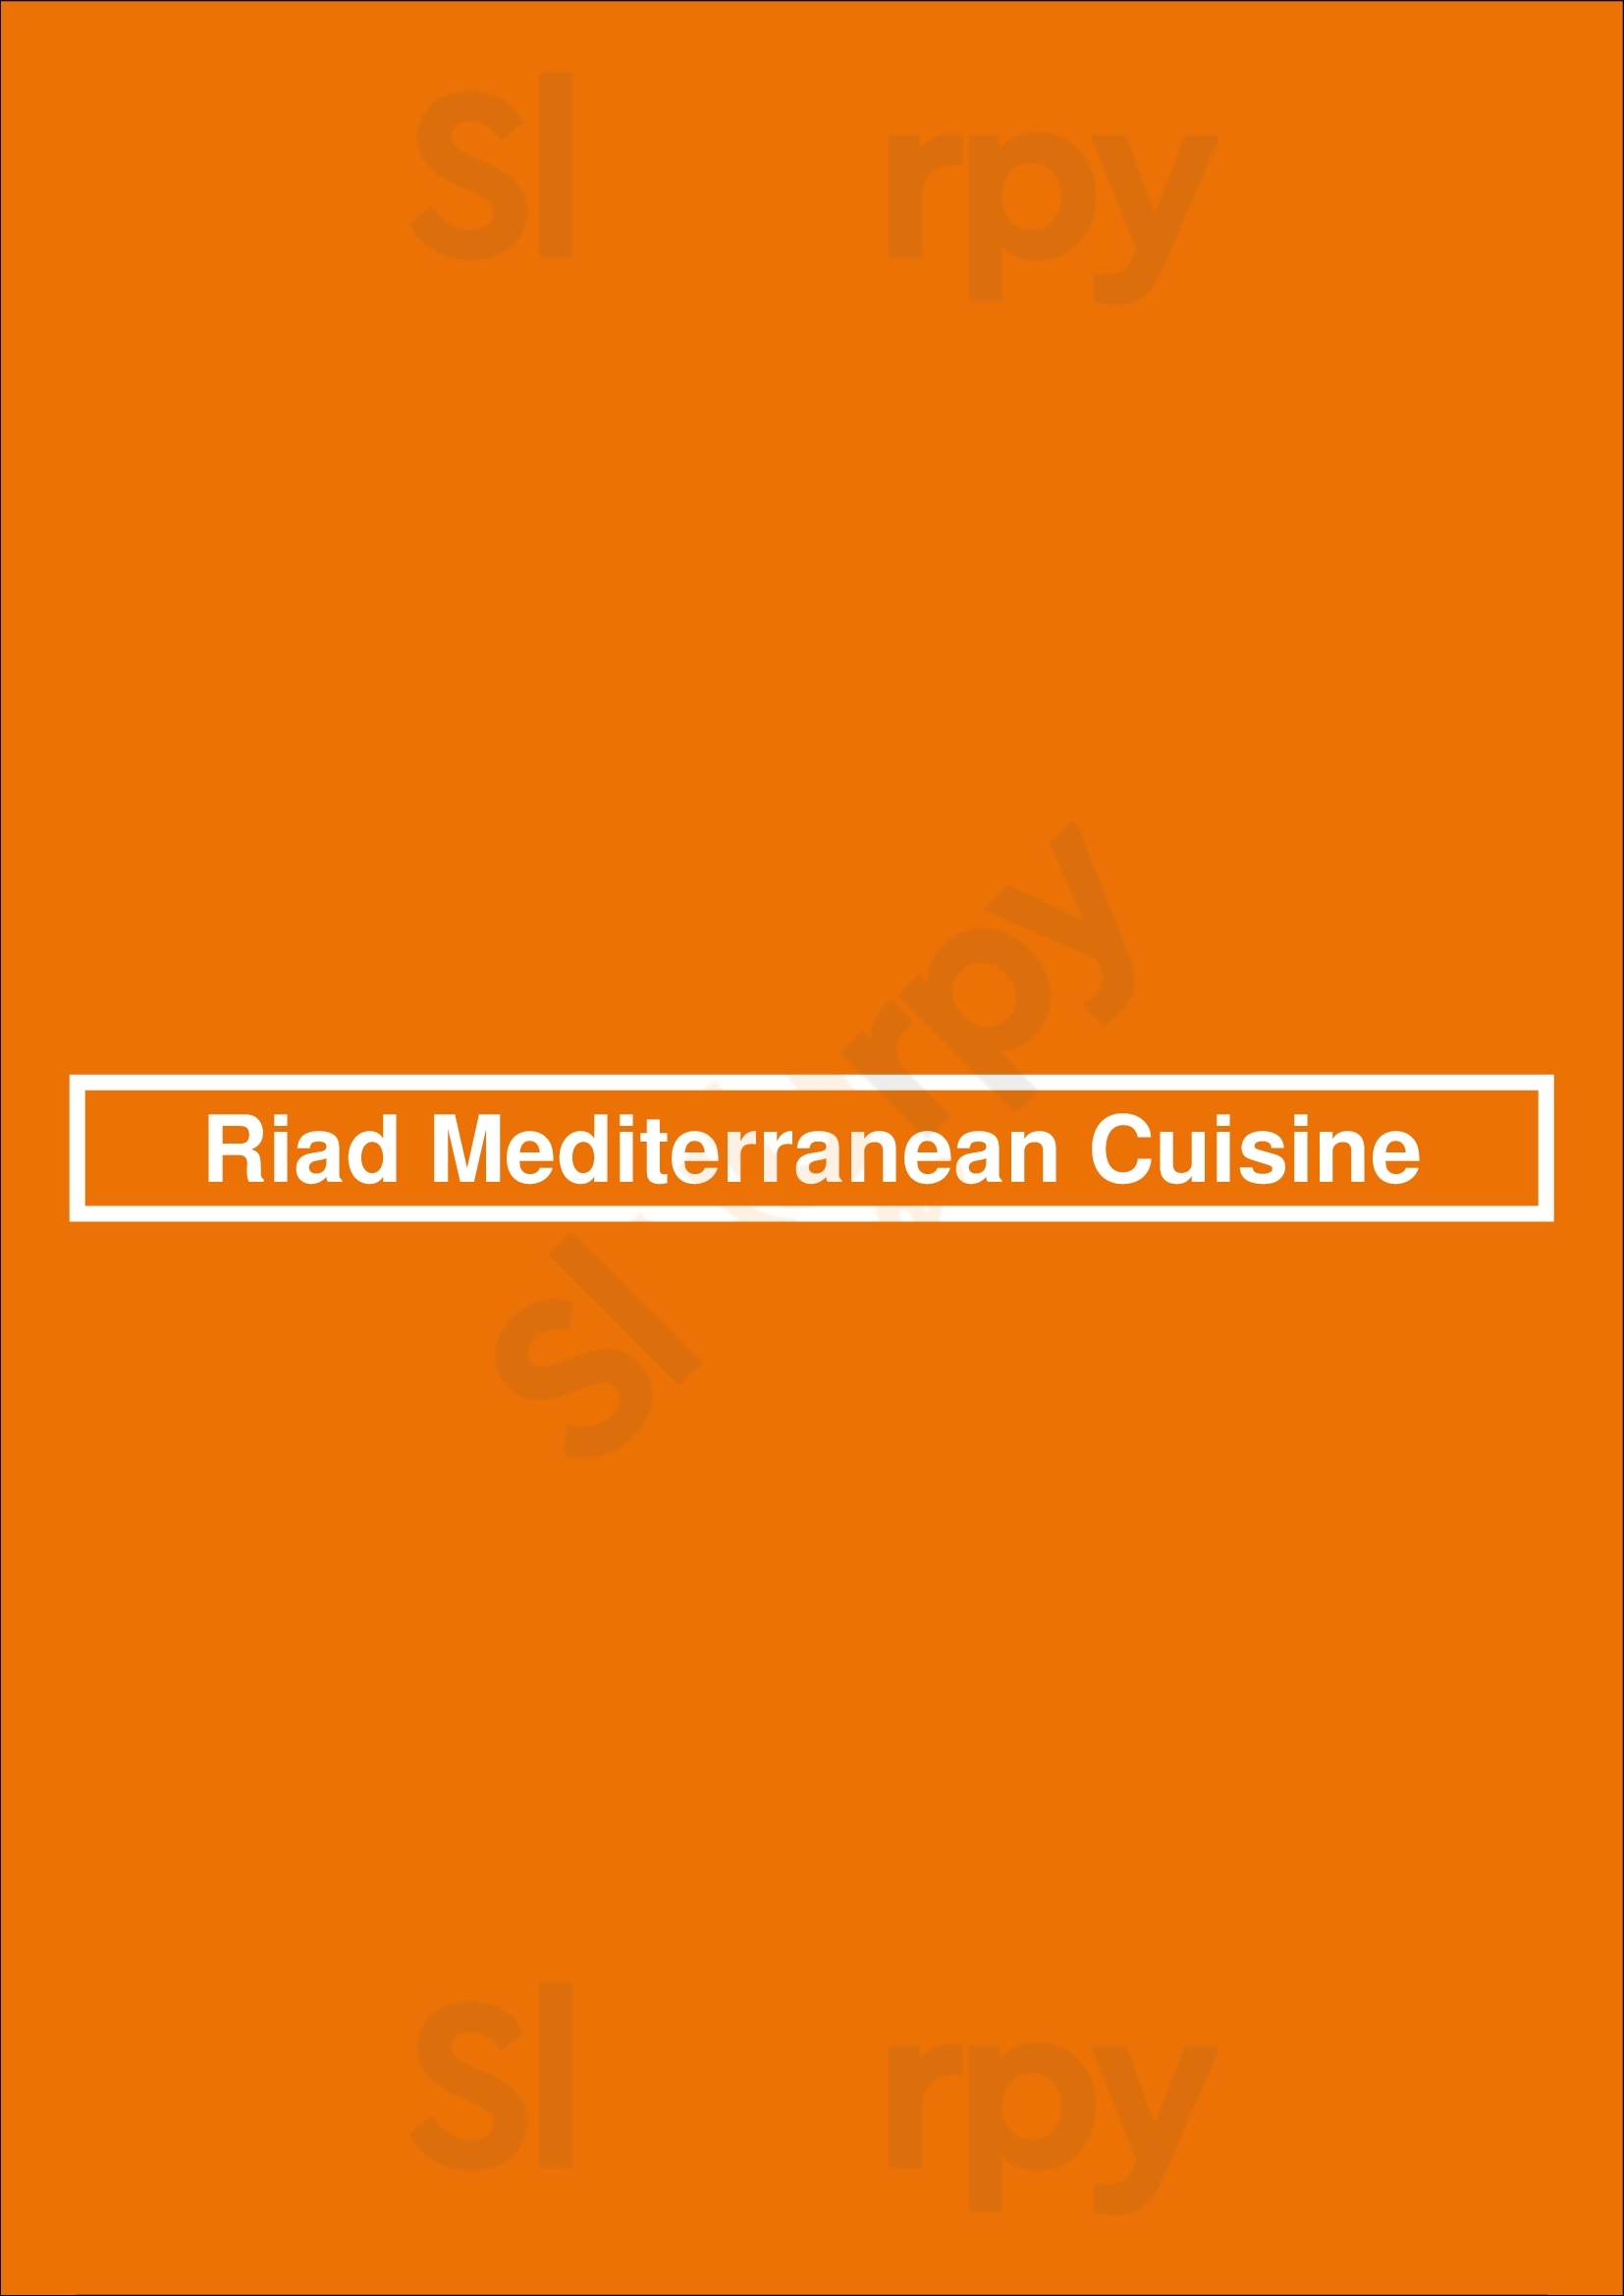 Riad Mediterranean Cuisine Springfield Menu - 1